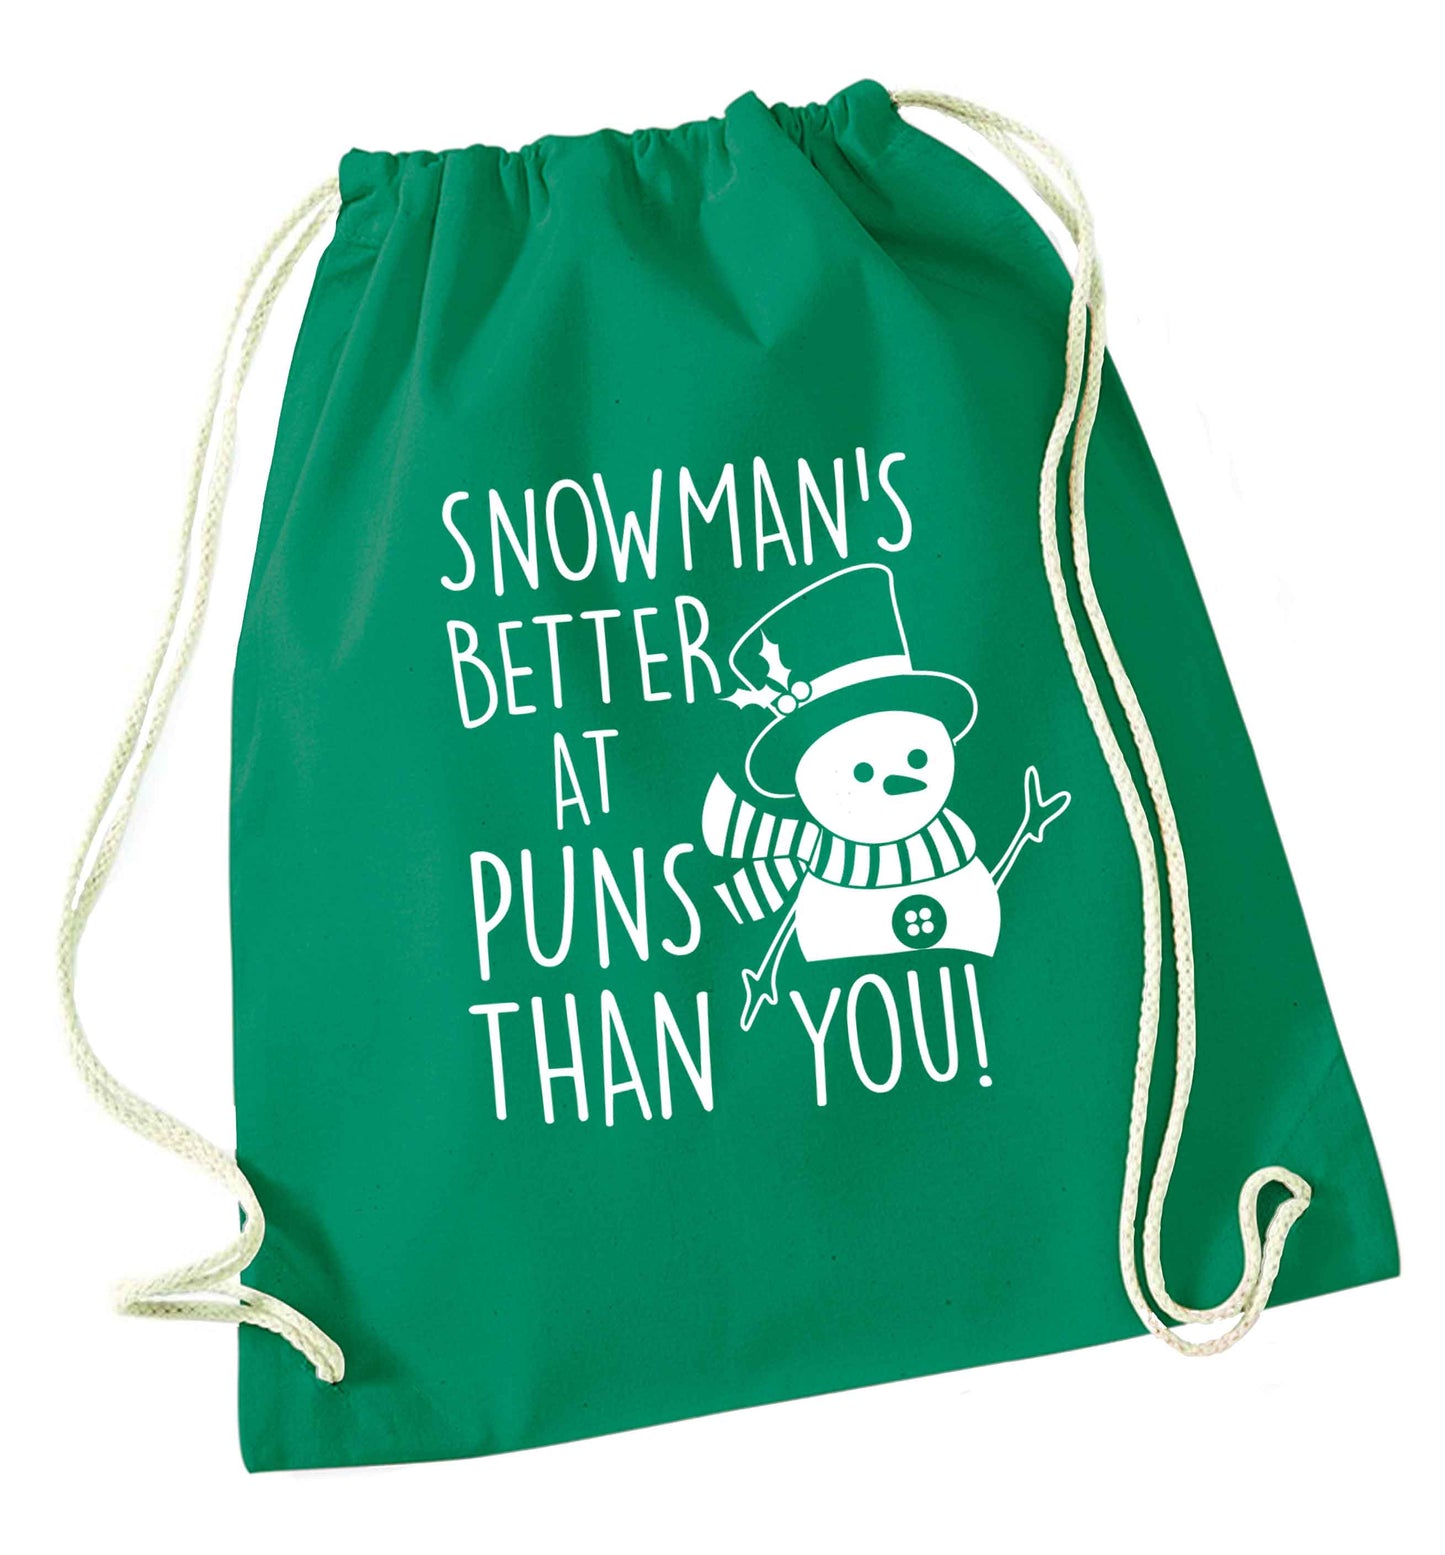 Snowman's Puns You green drawstring bag